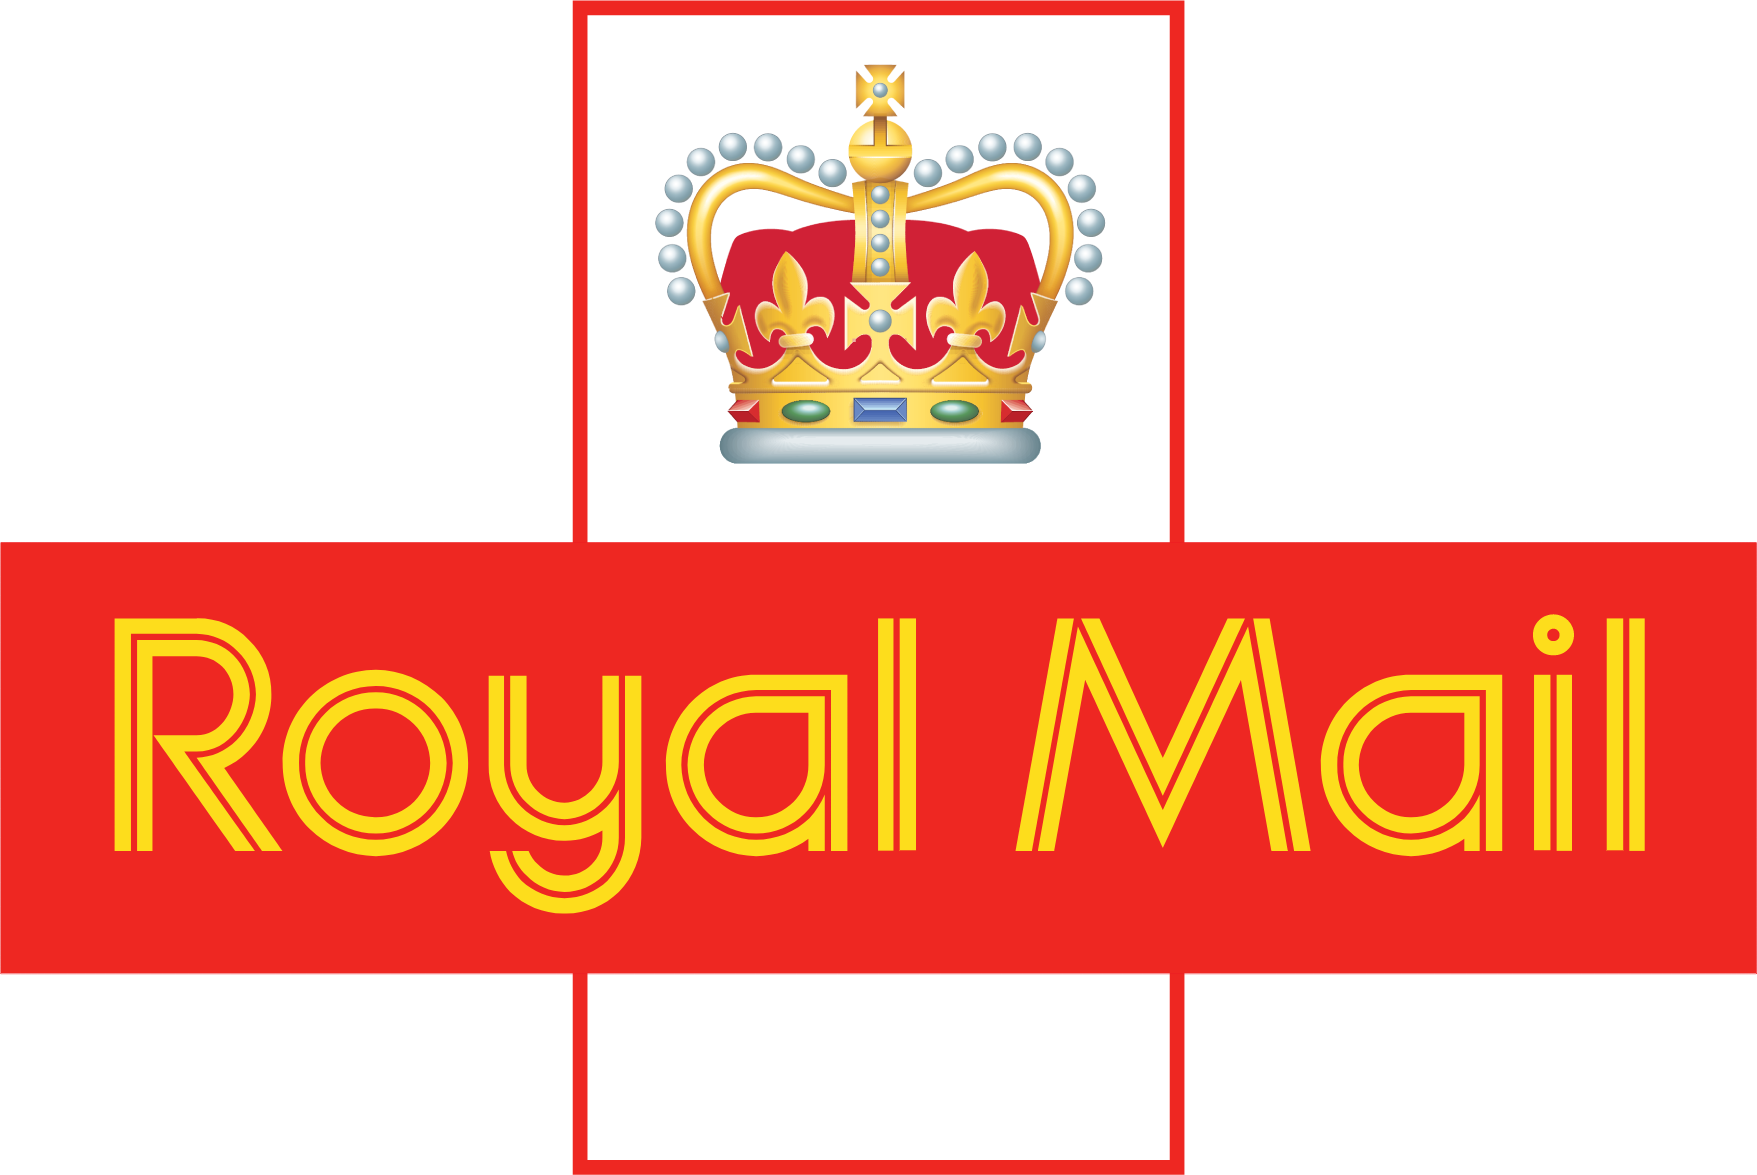 International Distributions Services (Royal Mail) logo (PNG transparent)